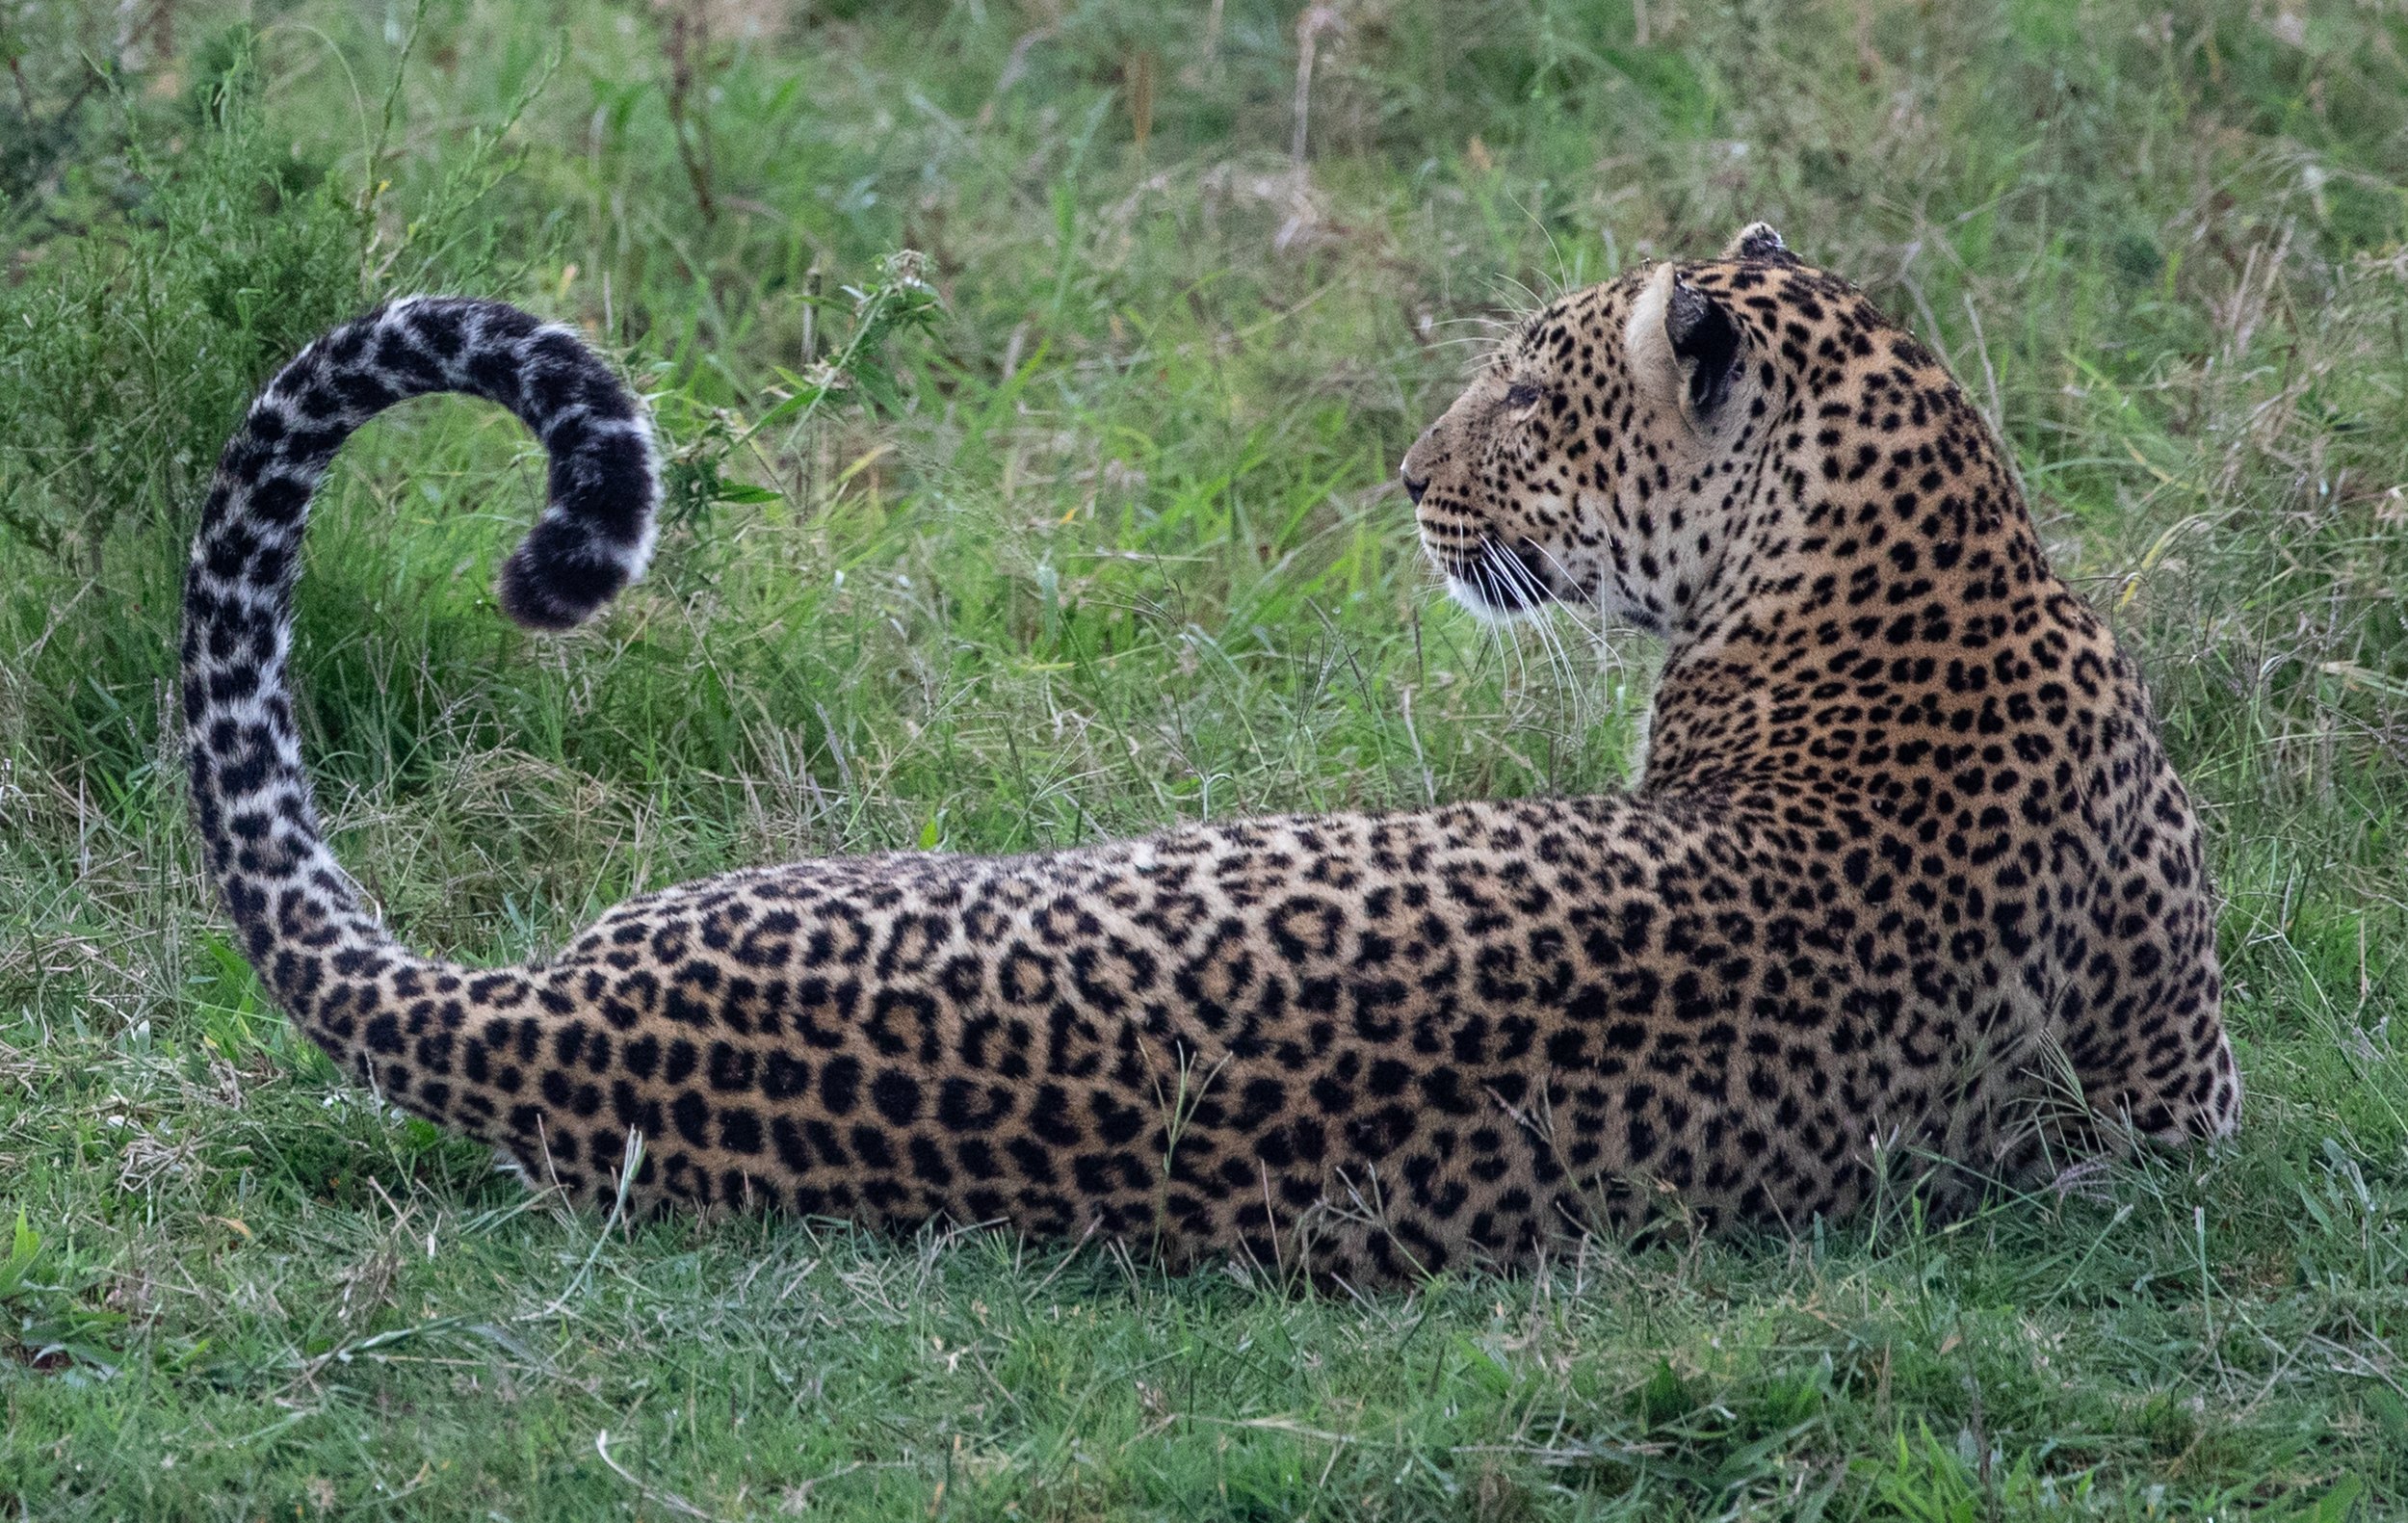 Leopard lounging tail up Maasai Mara Kenya by Millie Kerr (1 of 1).jpg